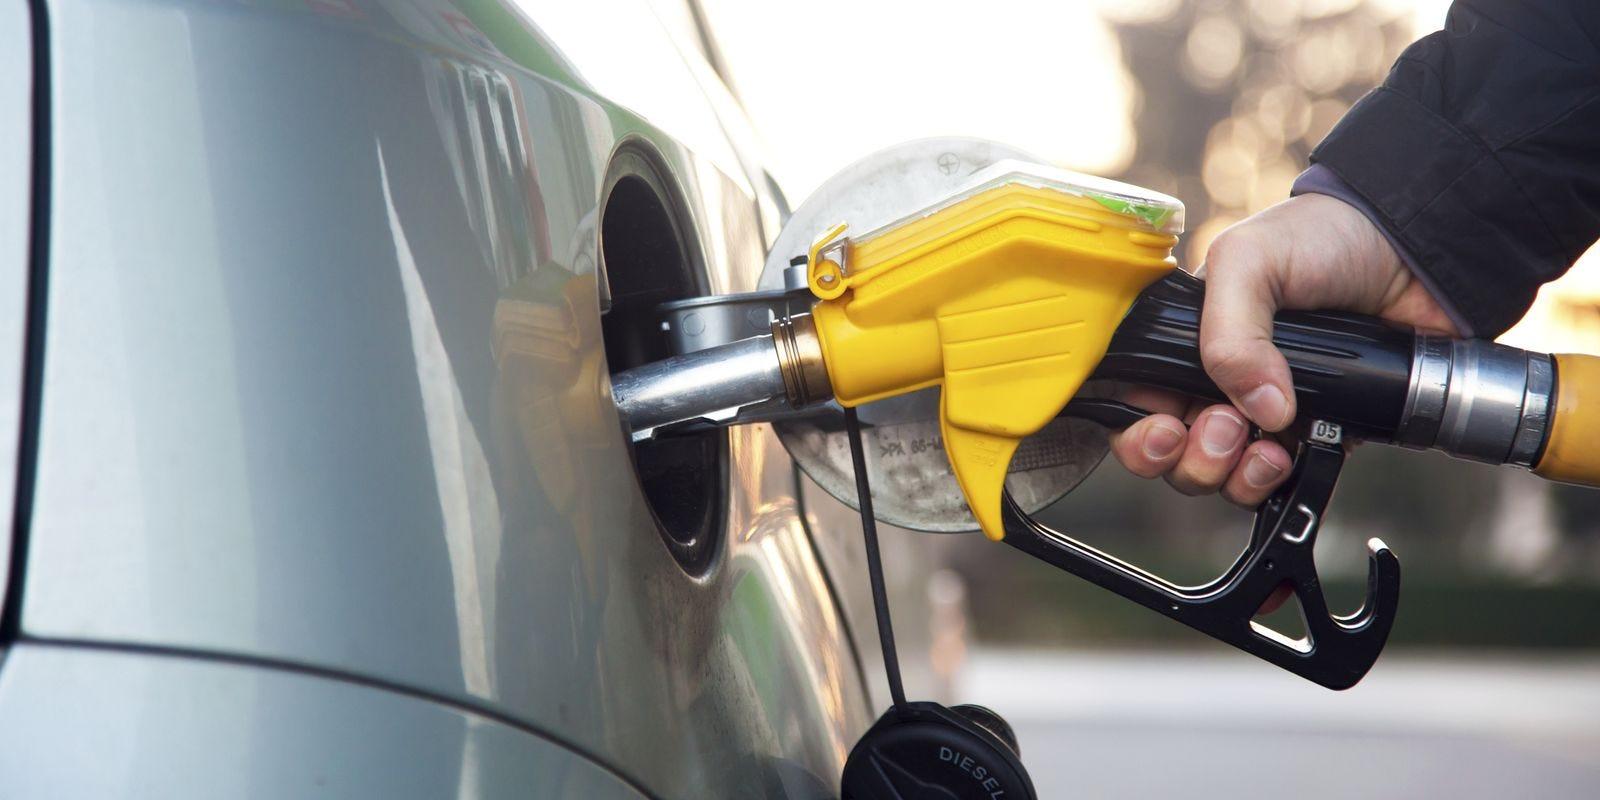 Monthly petrol subsidy hits N220bn in November, highest in 2 years